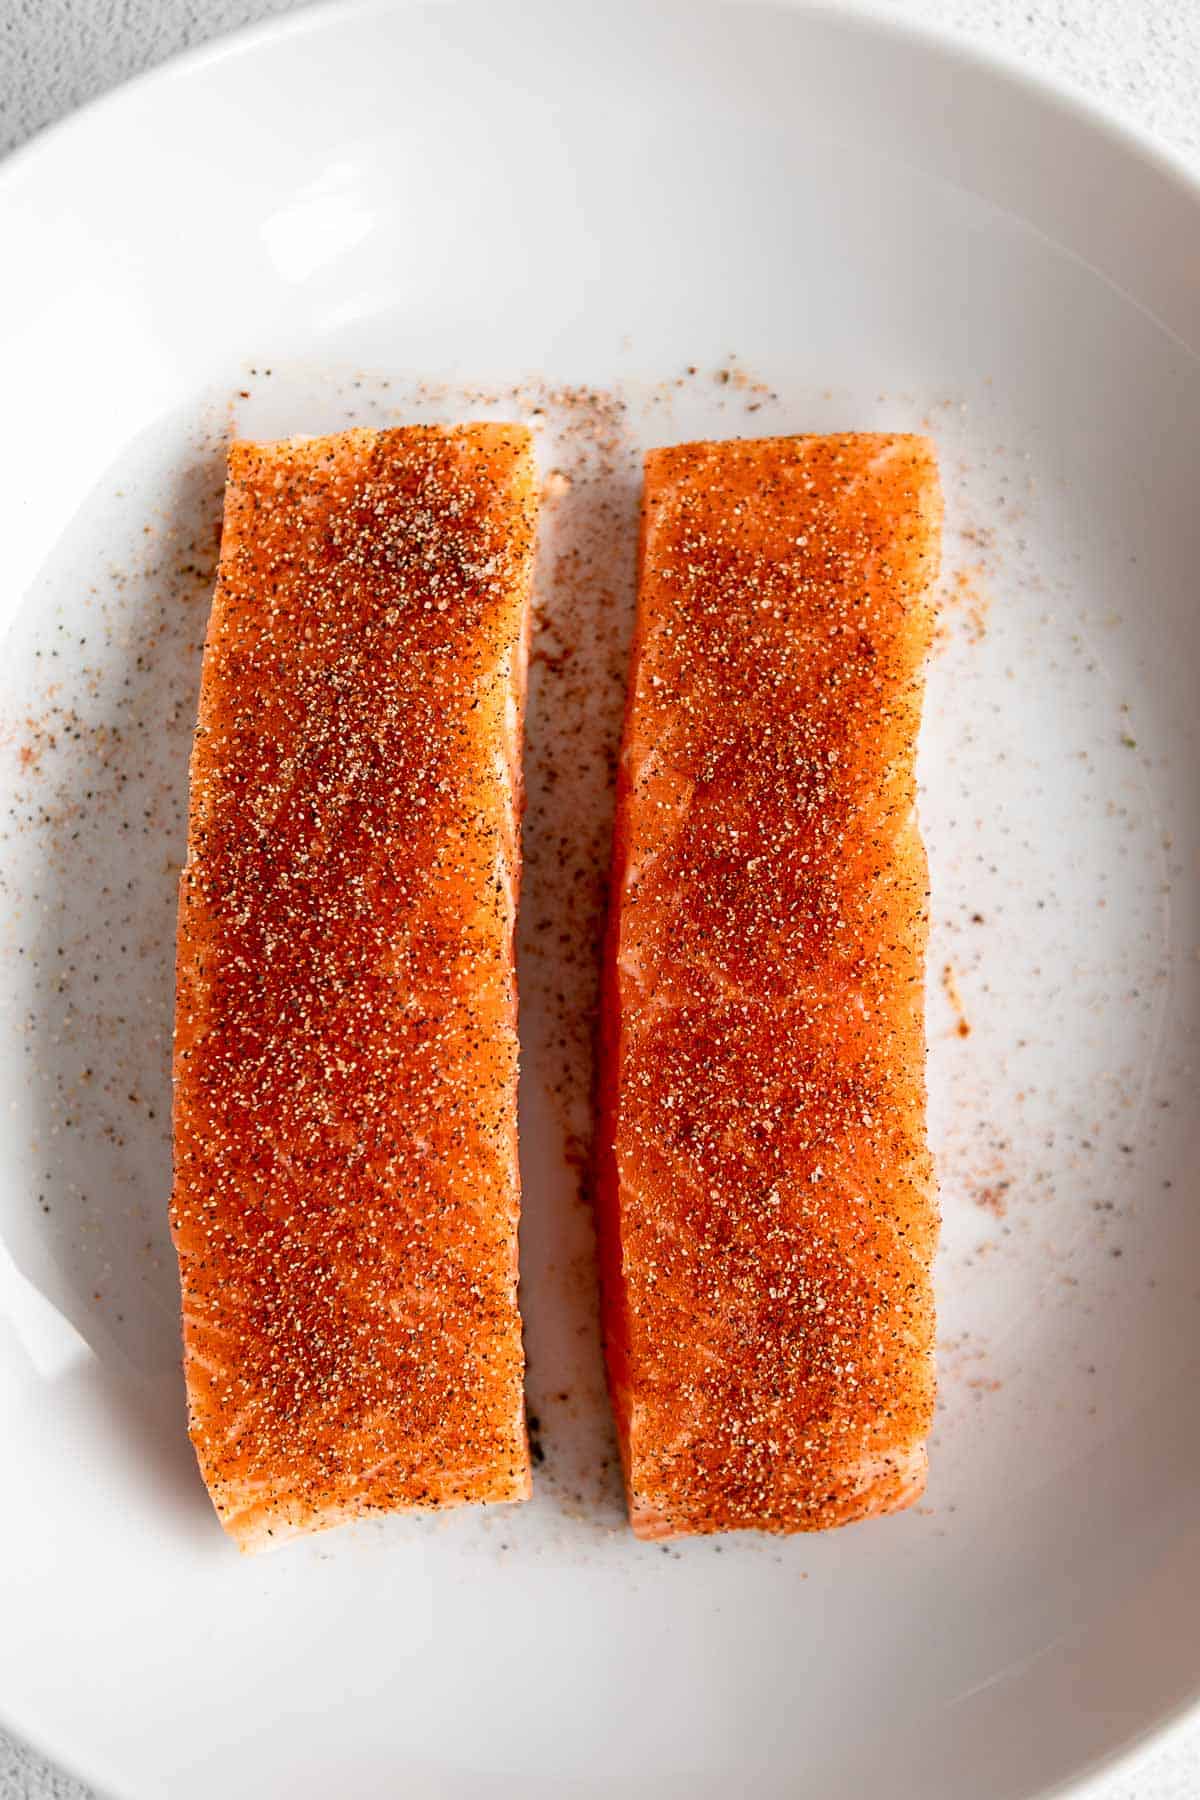 seasonings on the salmon